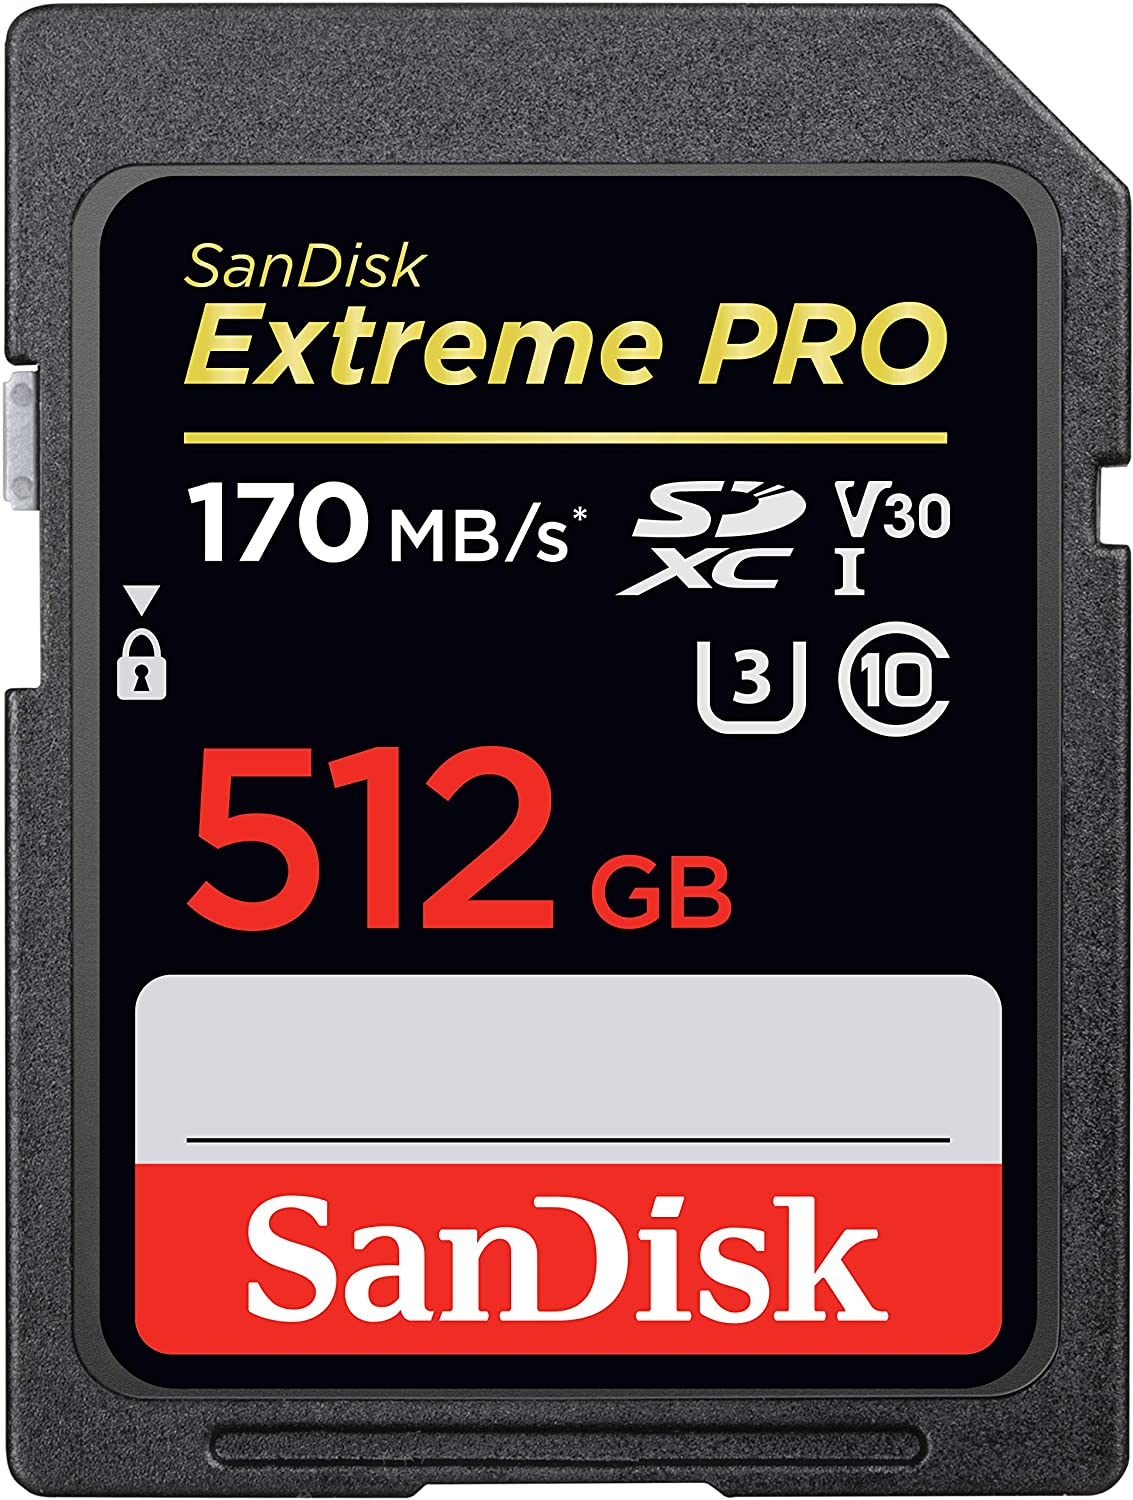 Sandisk Extreme Pro 512gb Render Cropped